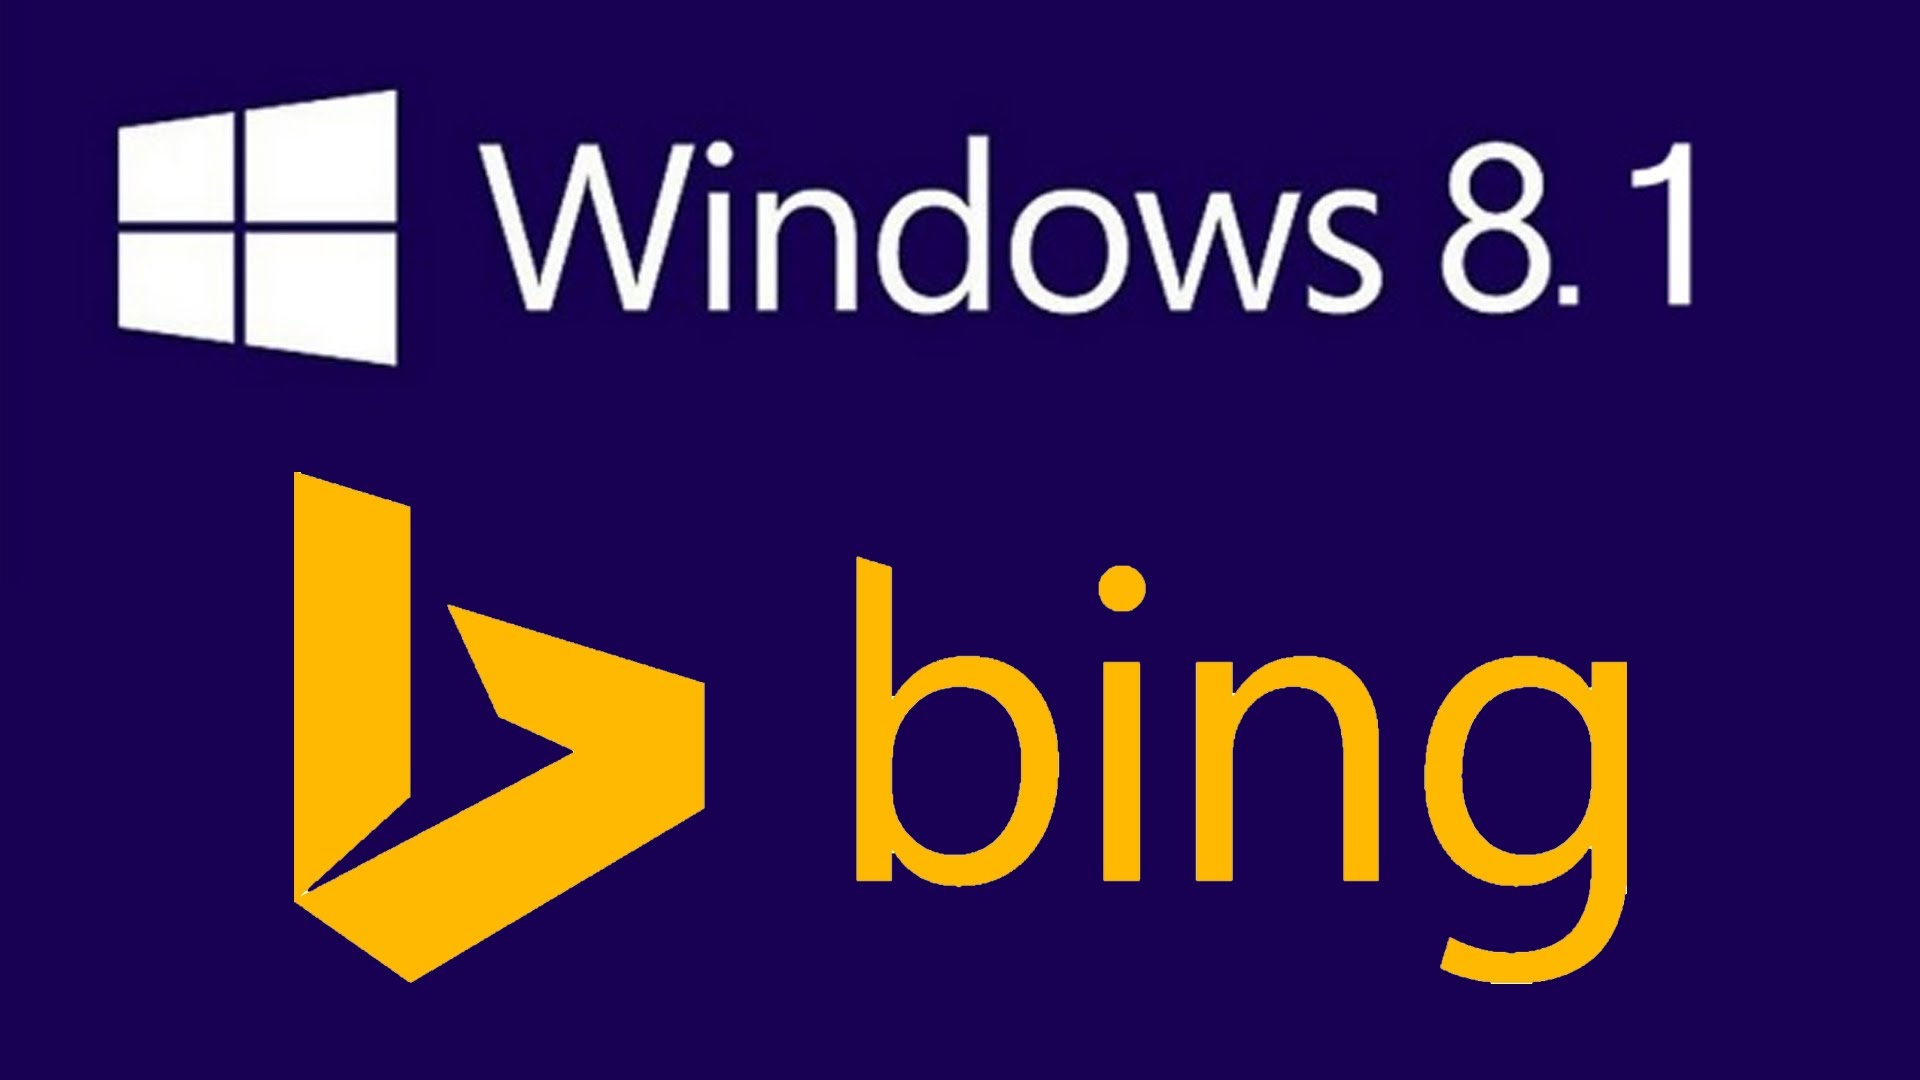 Microsoft Announces Windows 8.1 with Bing